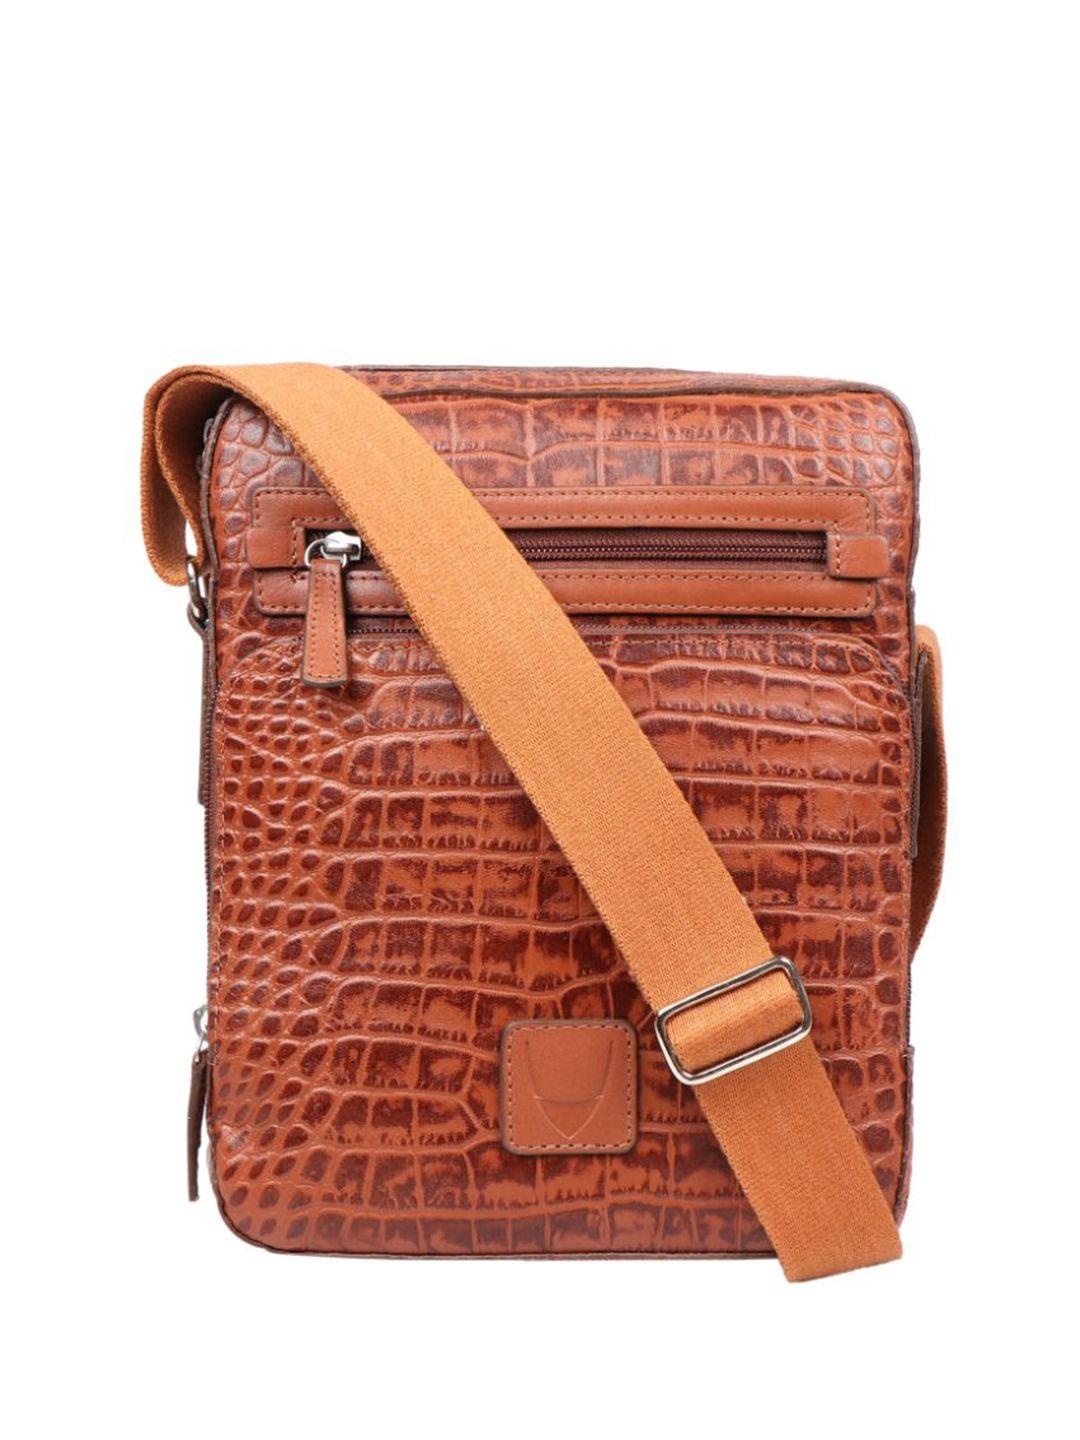 hidesign-textured-leather-messenger-bag